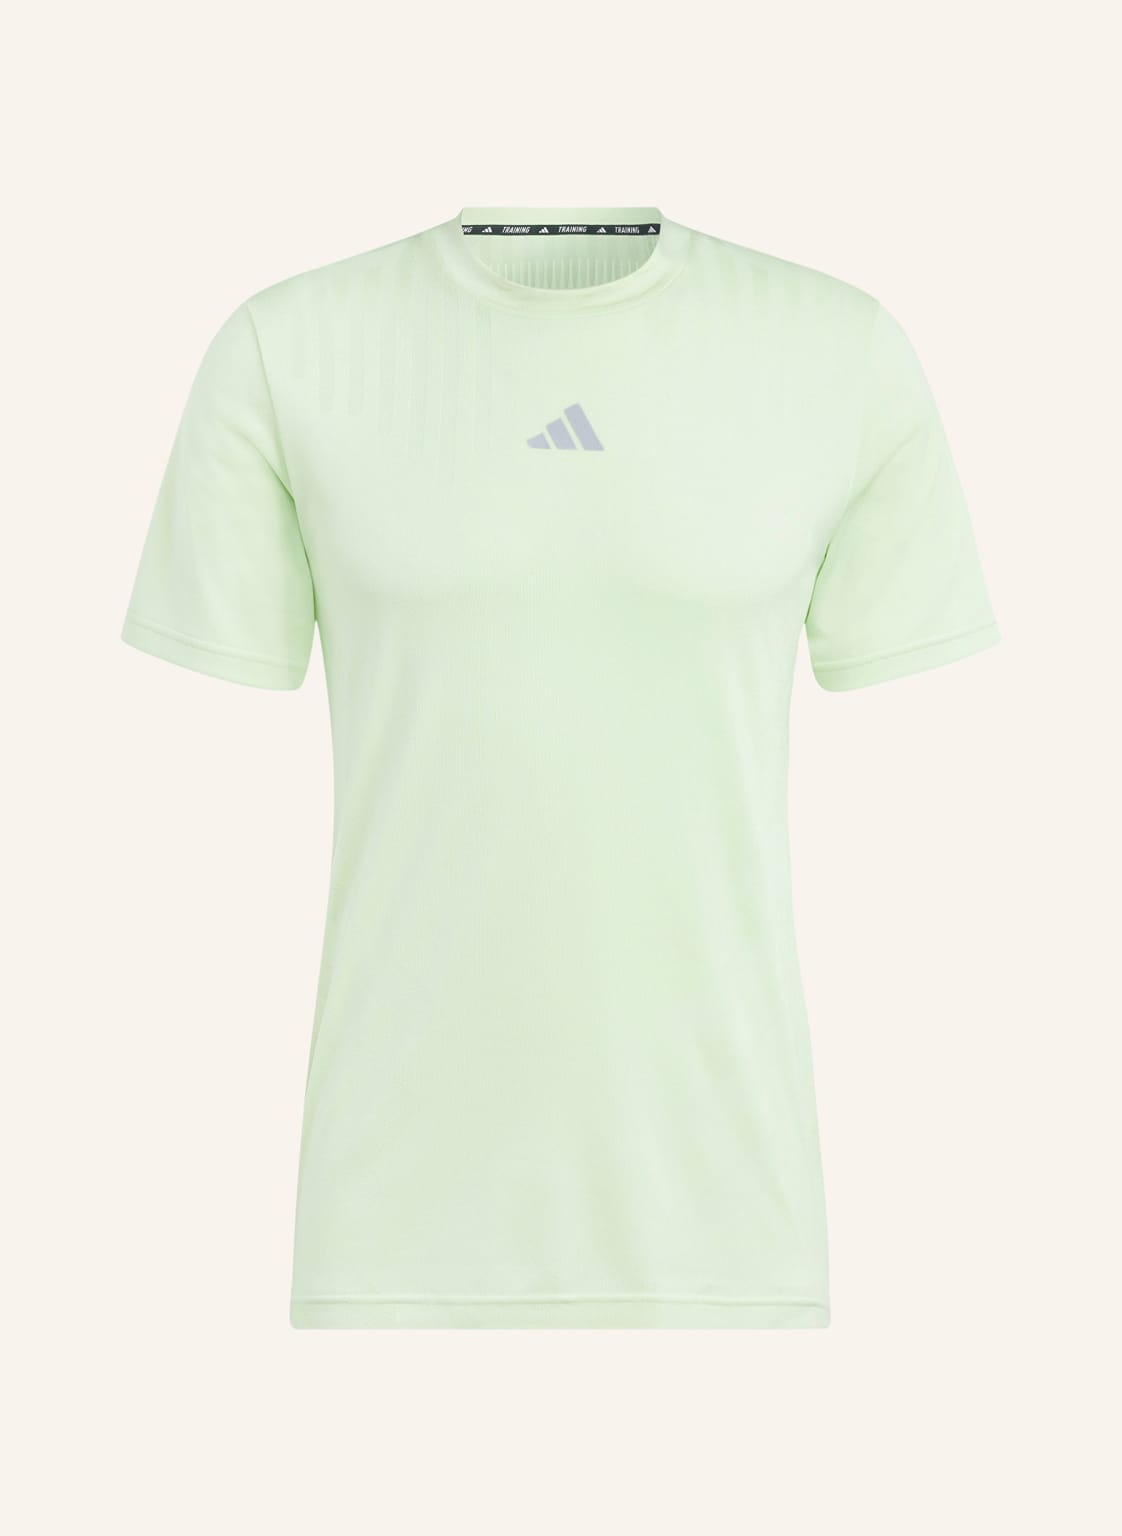 Adidas T-Shirt Hiit Airchill gruen von Adidas